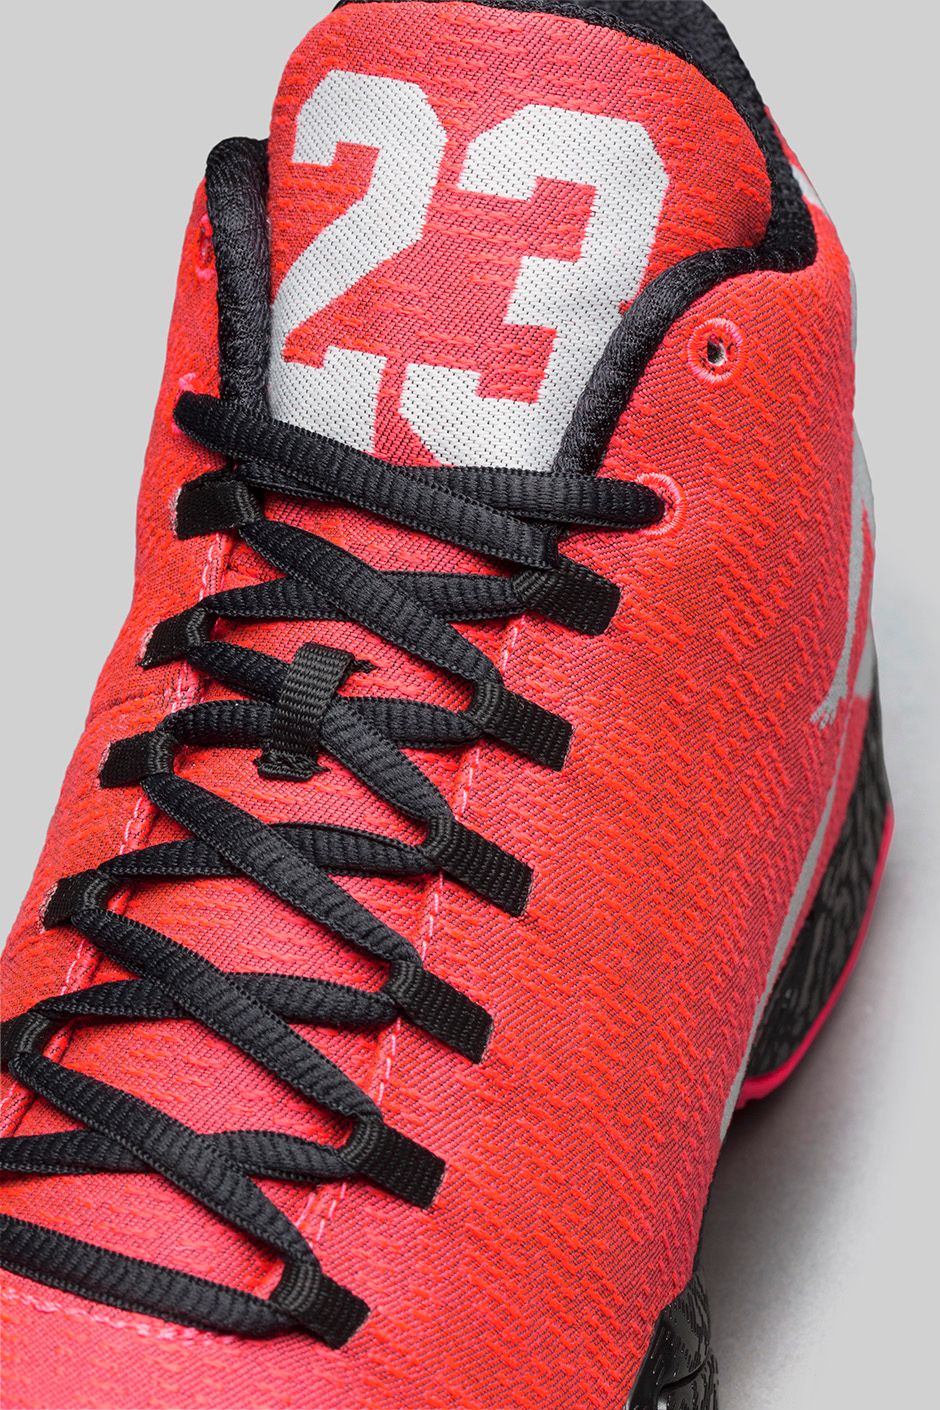 Air Jordan Xx9 Infrared 23 Nikestore Release Info 08